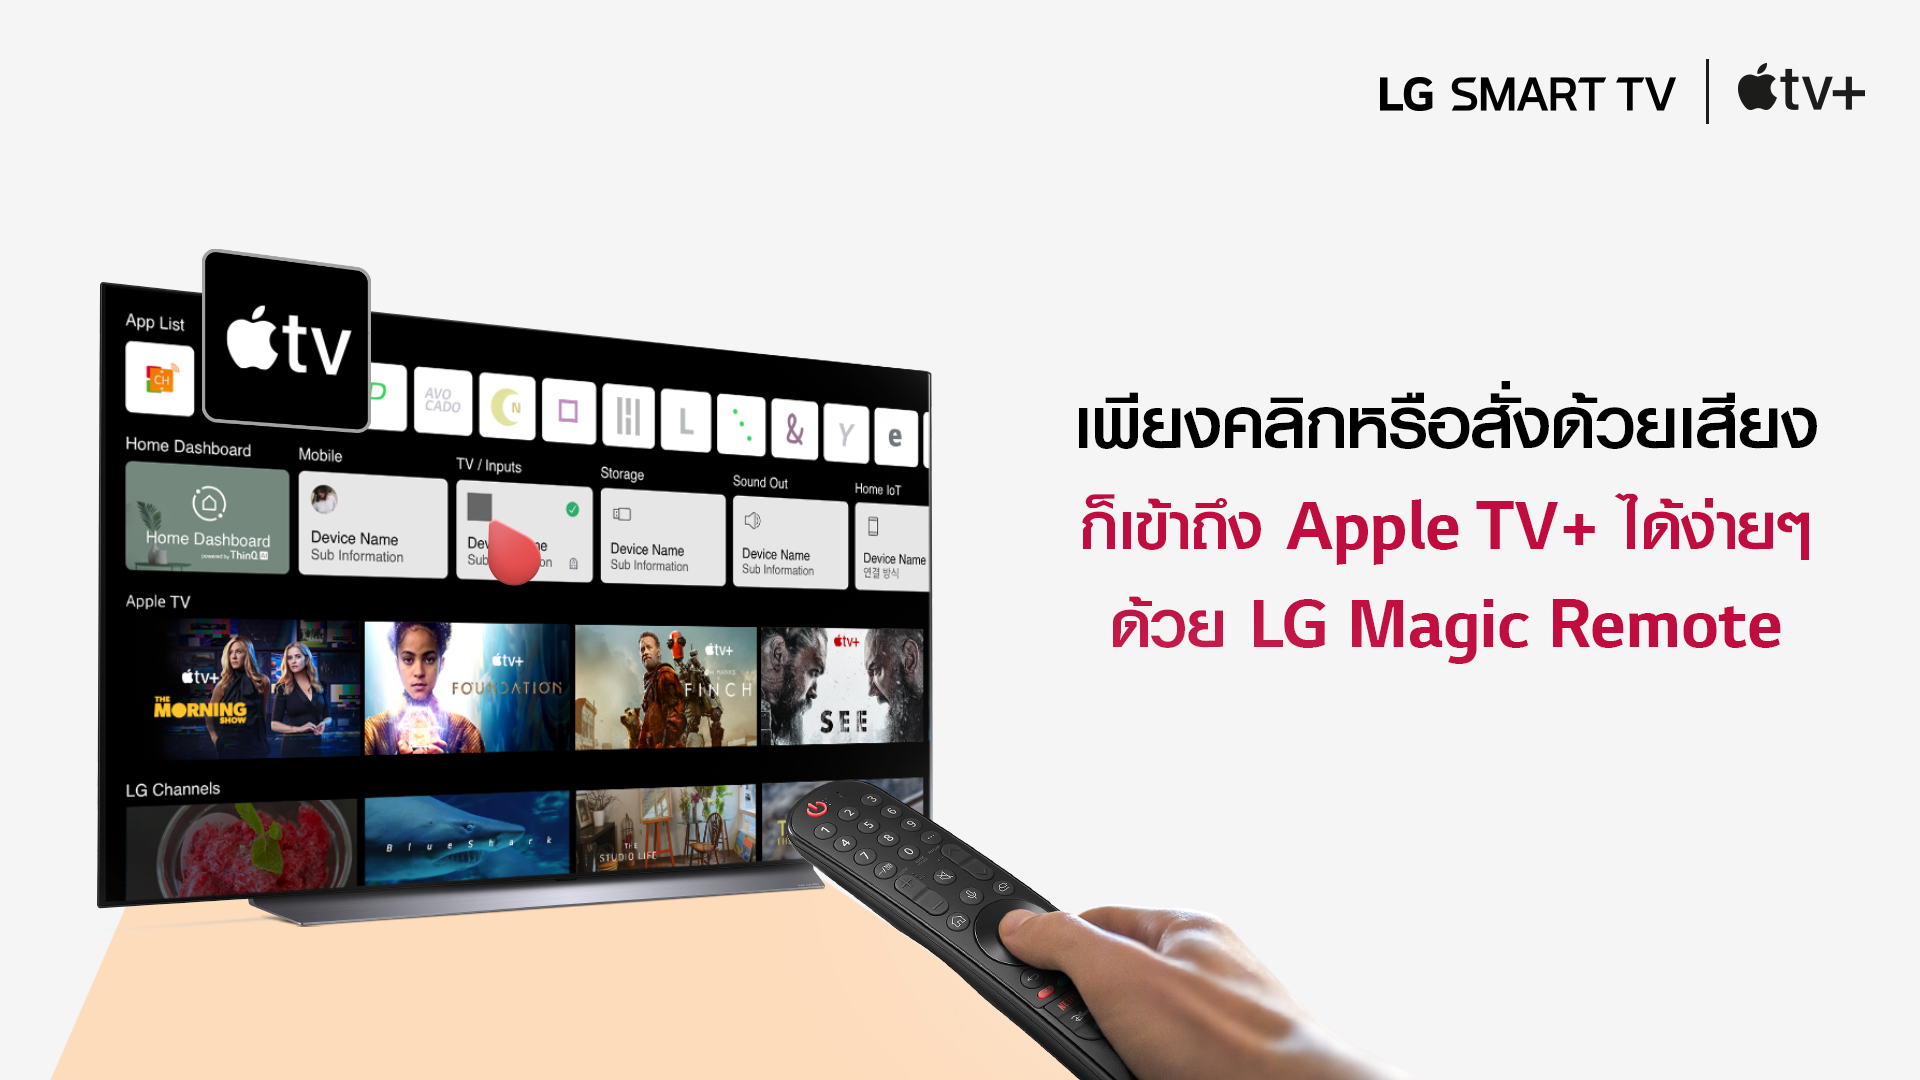 LG Smart TV - LG x Apple TV 2 - ภาพที่ 3